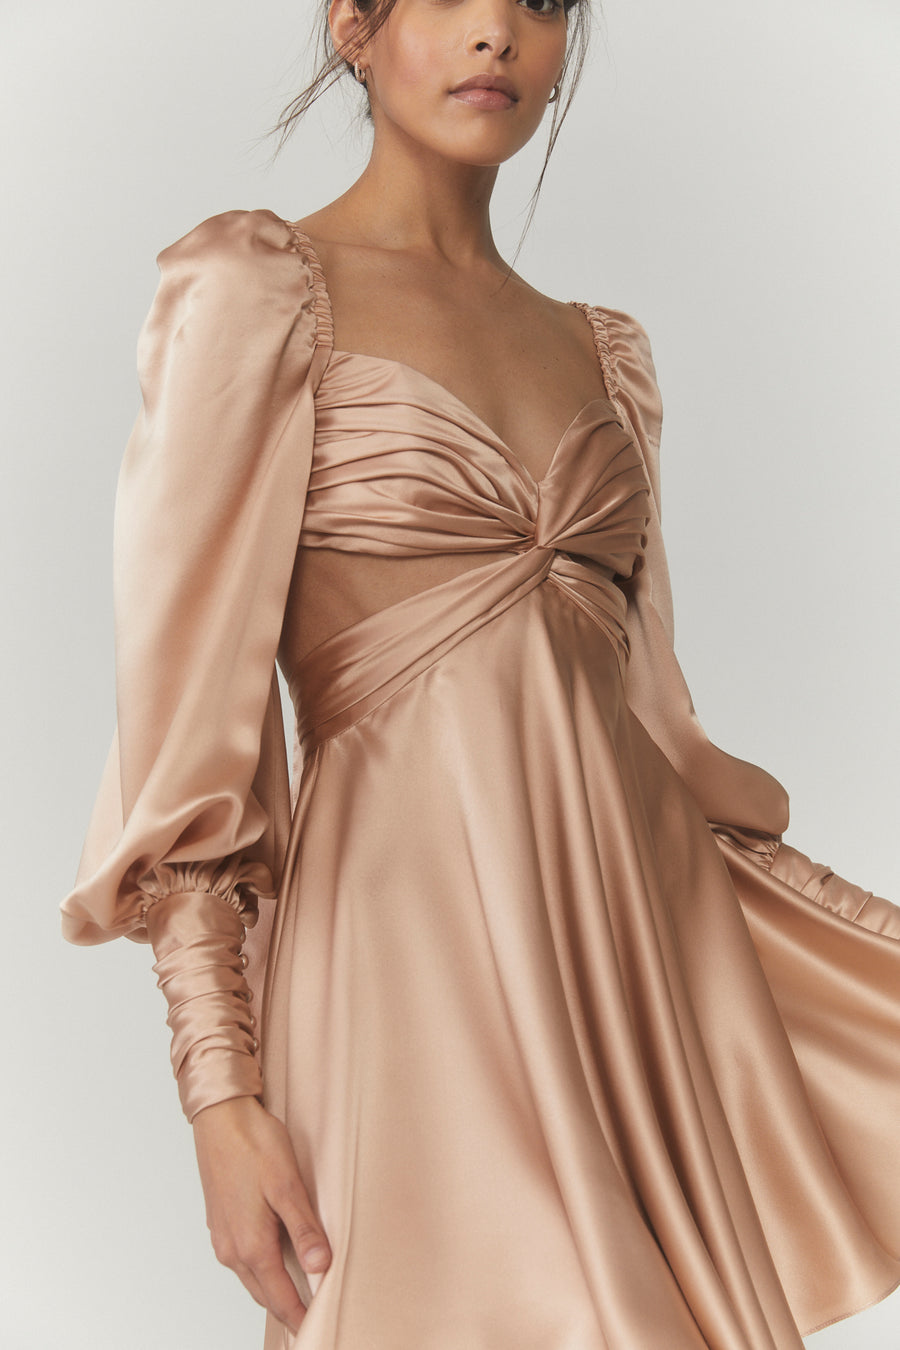 Spotlight Dress in Rose Gold